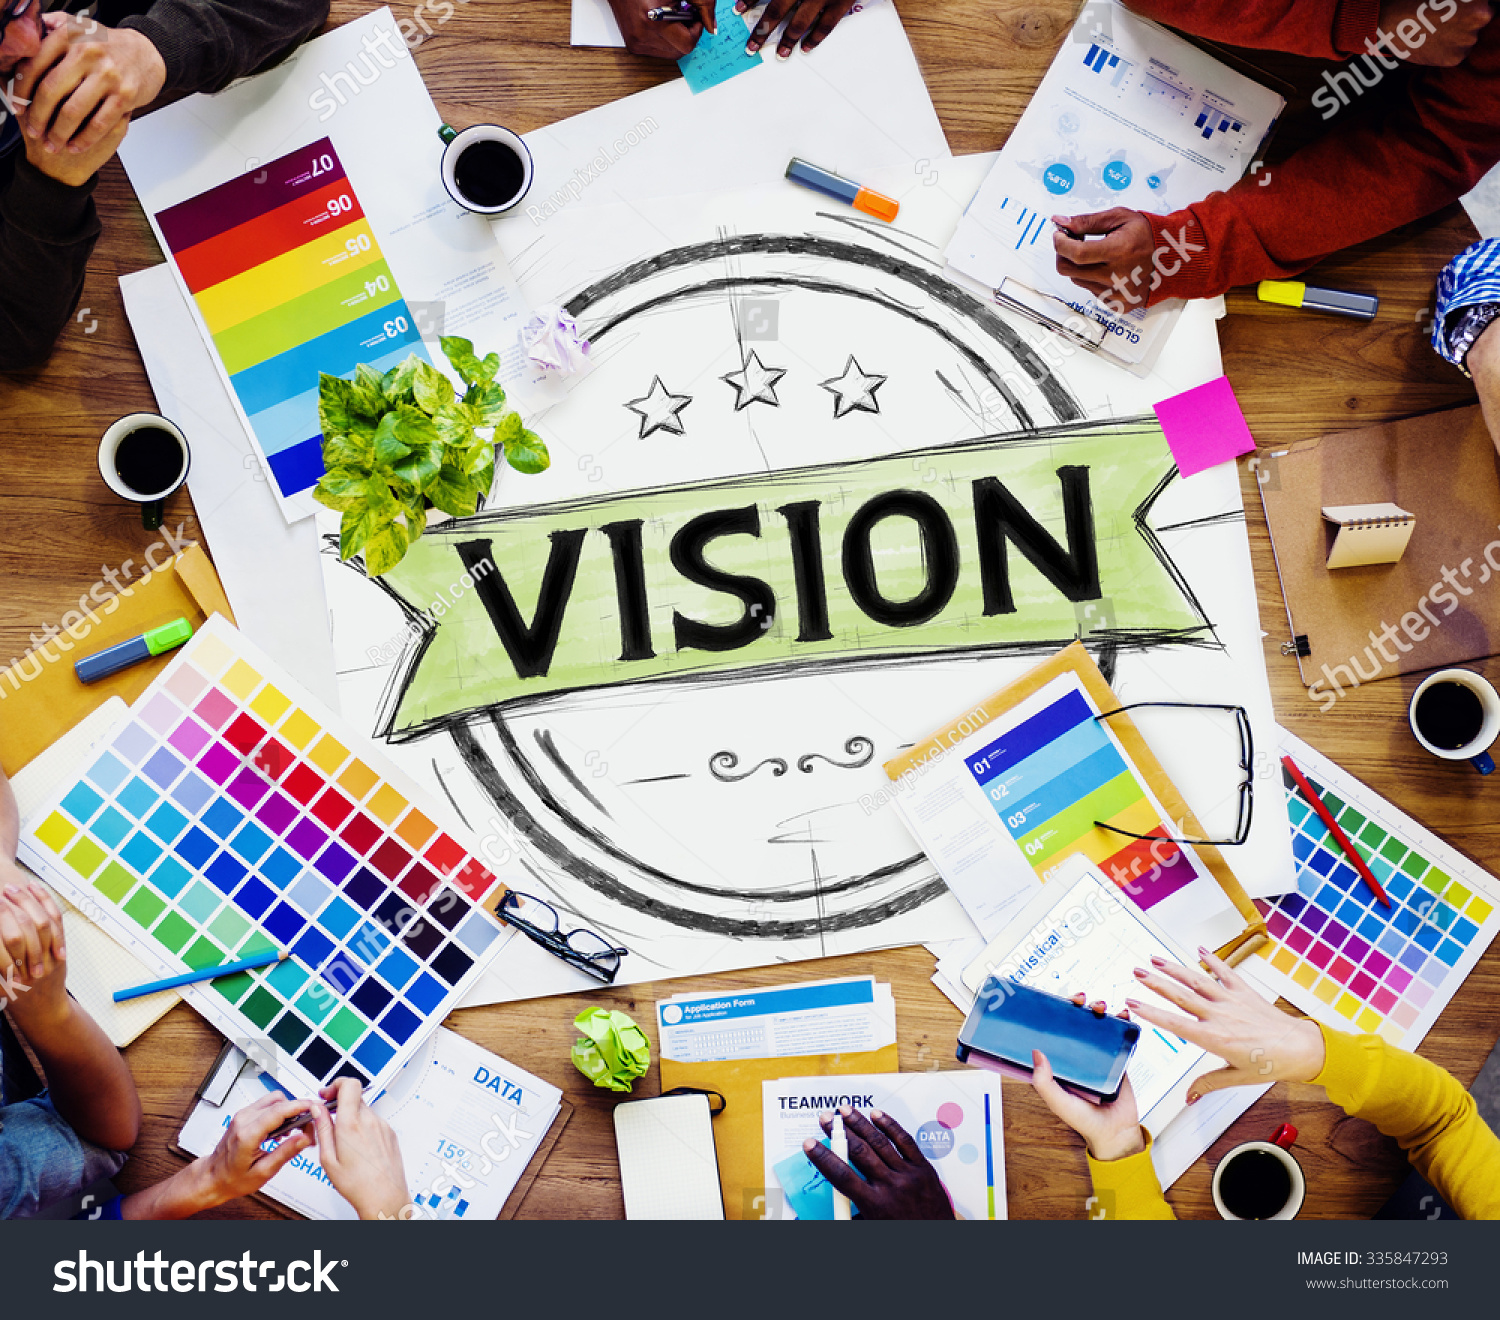 Vision Inspiration Aspiration Target Dreams Concept Stock Photo ...